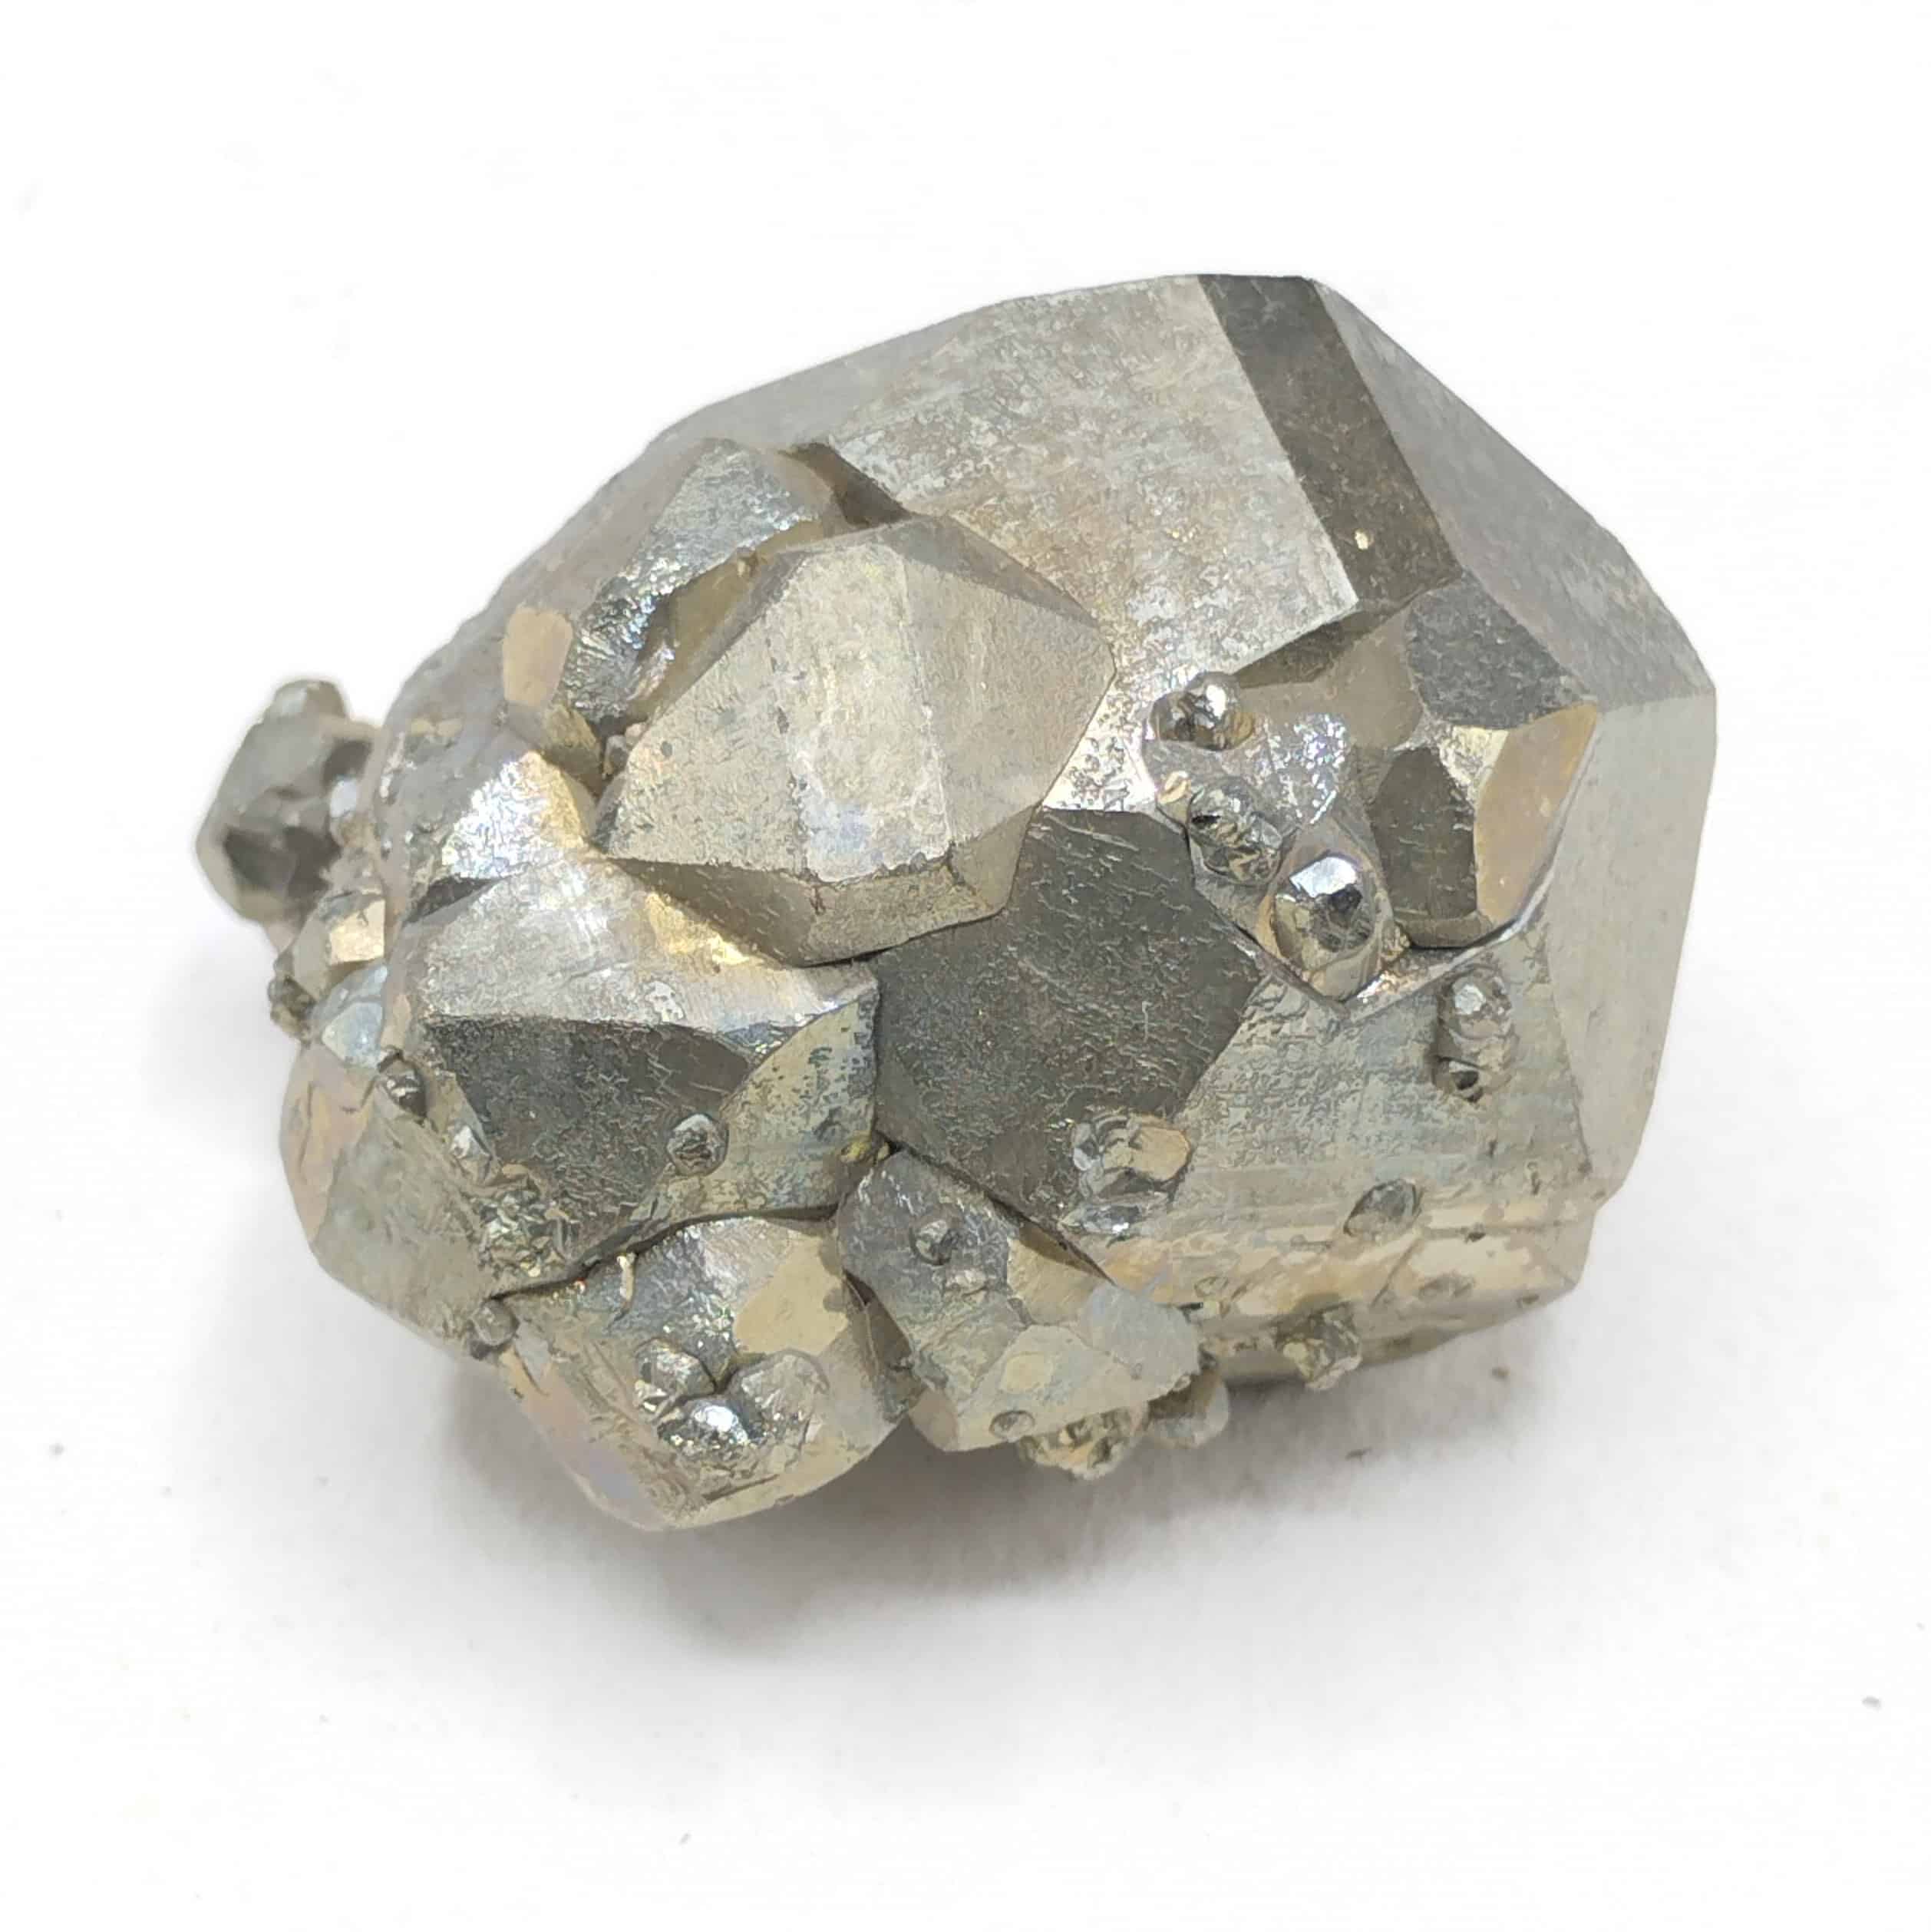 Pyrite « pyritoèdre », Huanzala, Pérou.